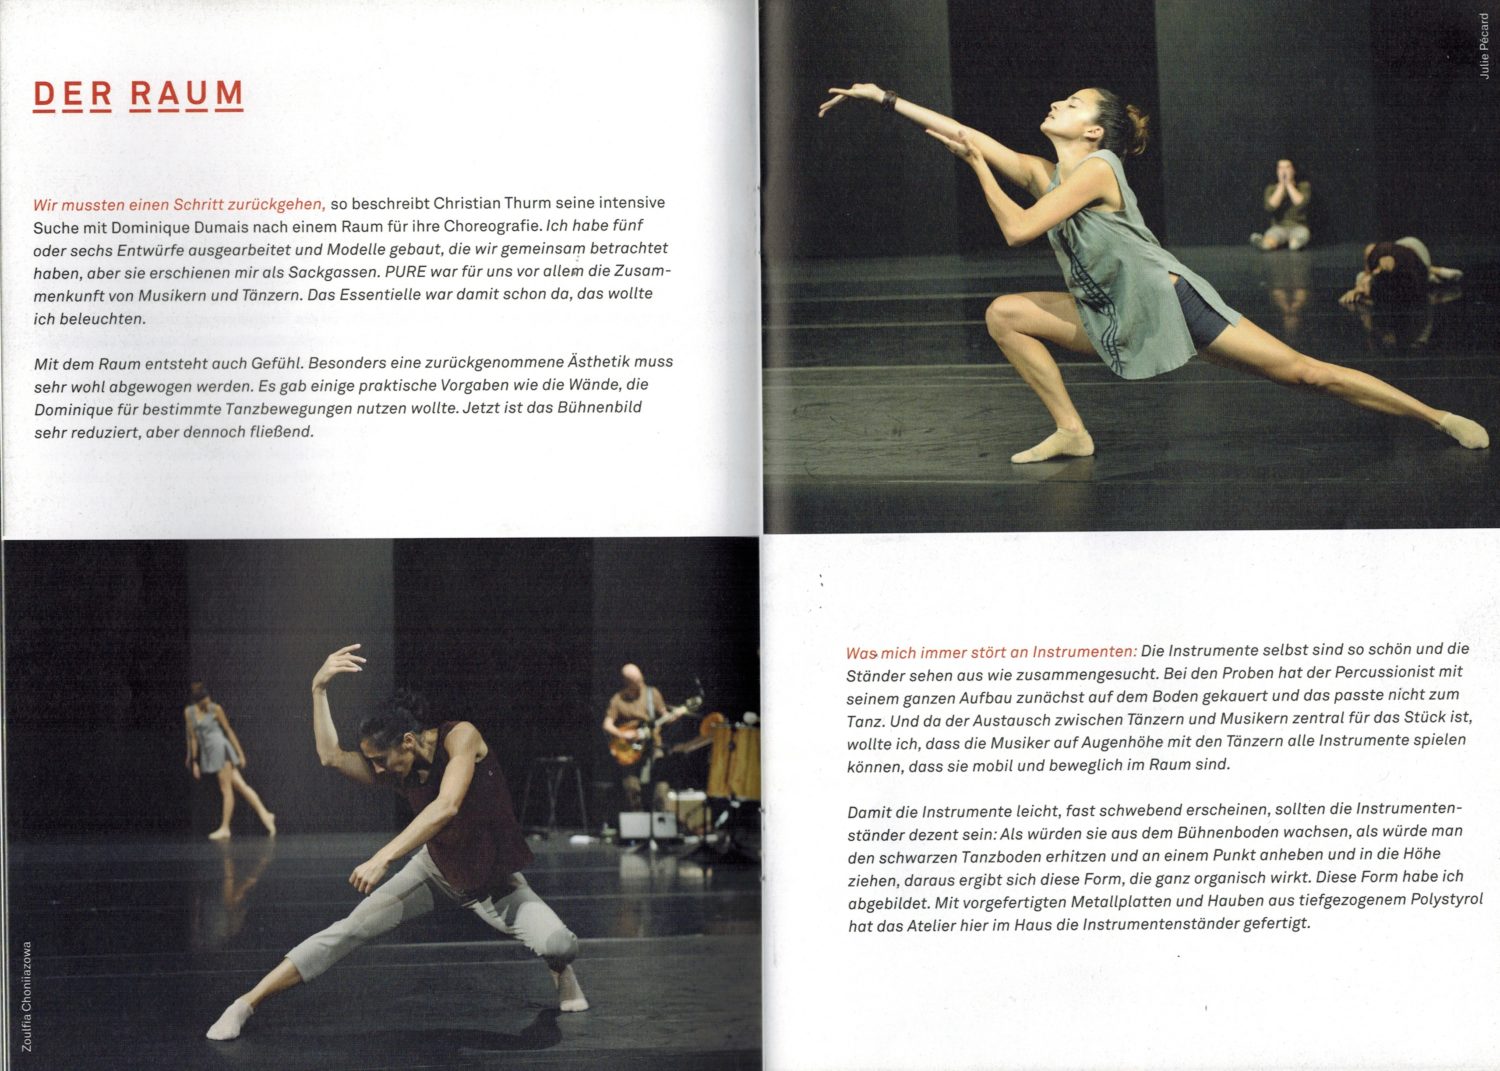 Pure, Kevin O'Day Ballett Mannheim, Domique Dumais, Peter Hinz, Martin Lejeune